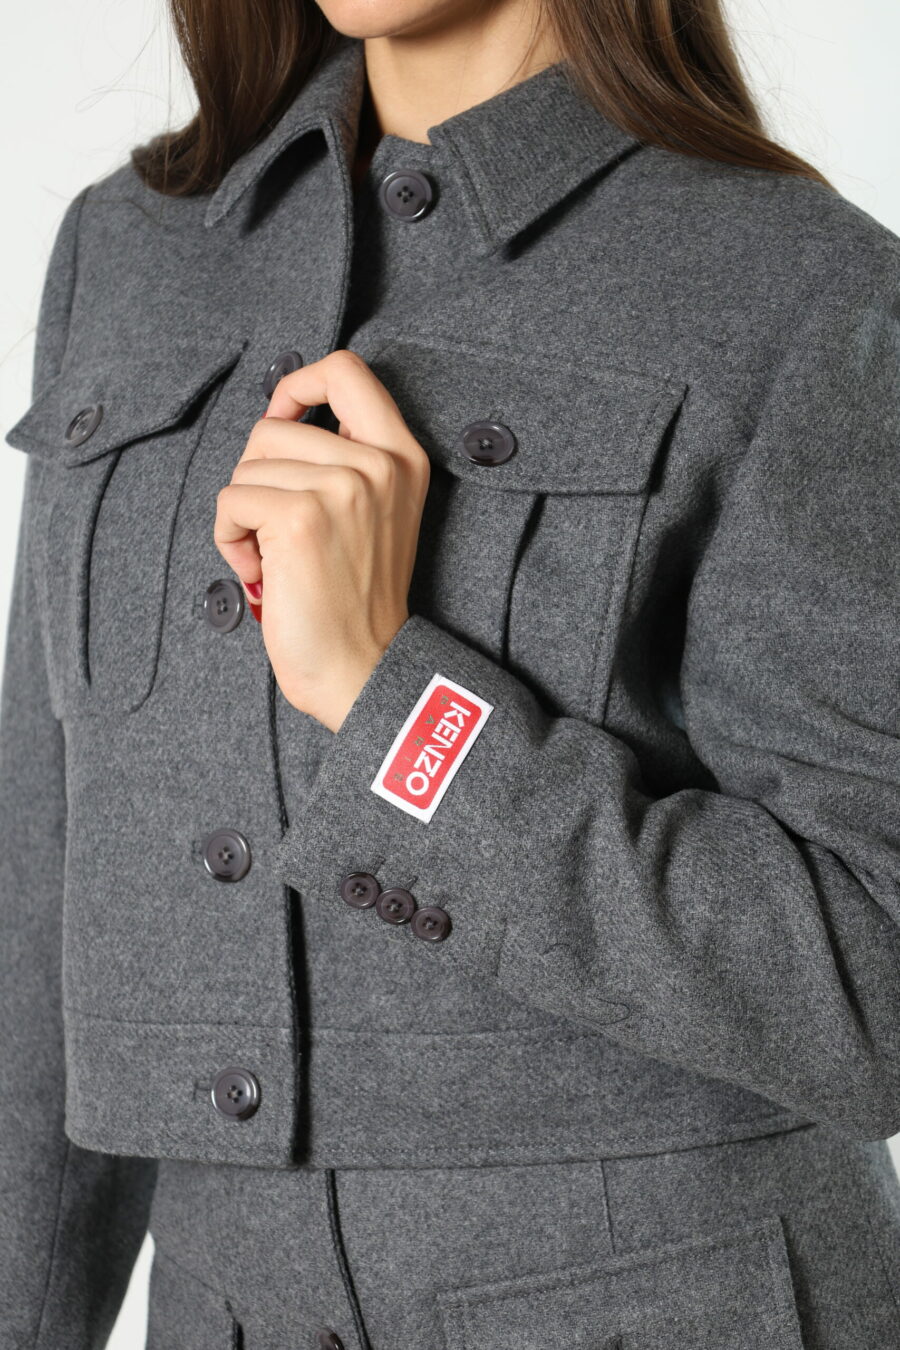 Graue Jacke mit Mini-Logo am Ärmel - 8052865435499 409 1 skaliert